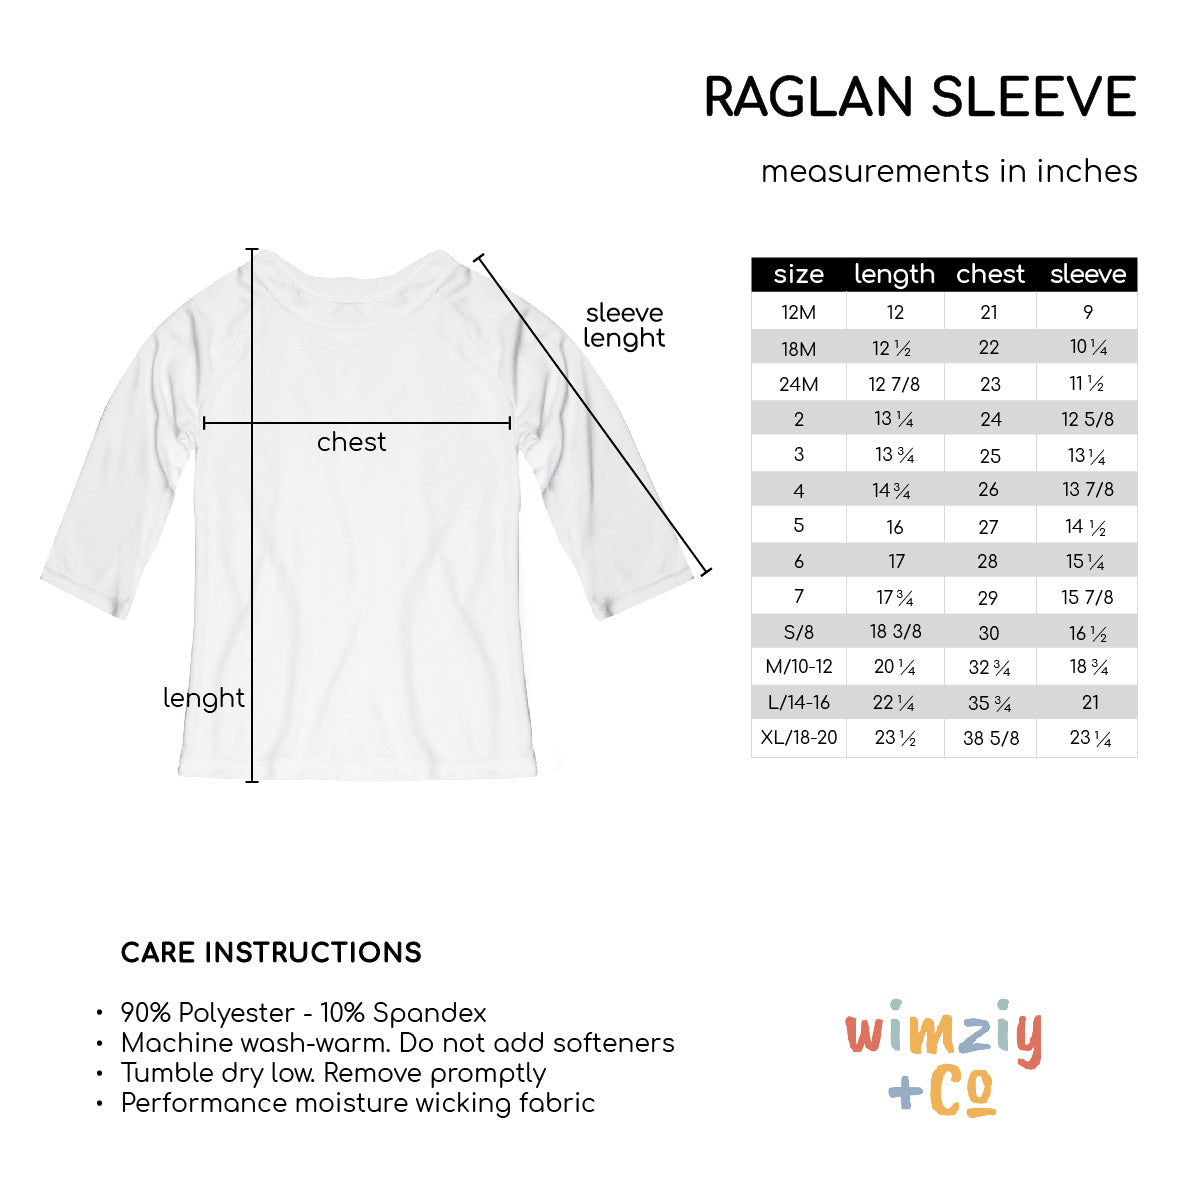 Your Are Magic Name Rainbow Color Raglan Tee Shirt 3/4 Sleeve - Wimziy&Co.